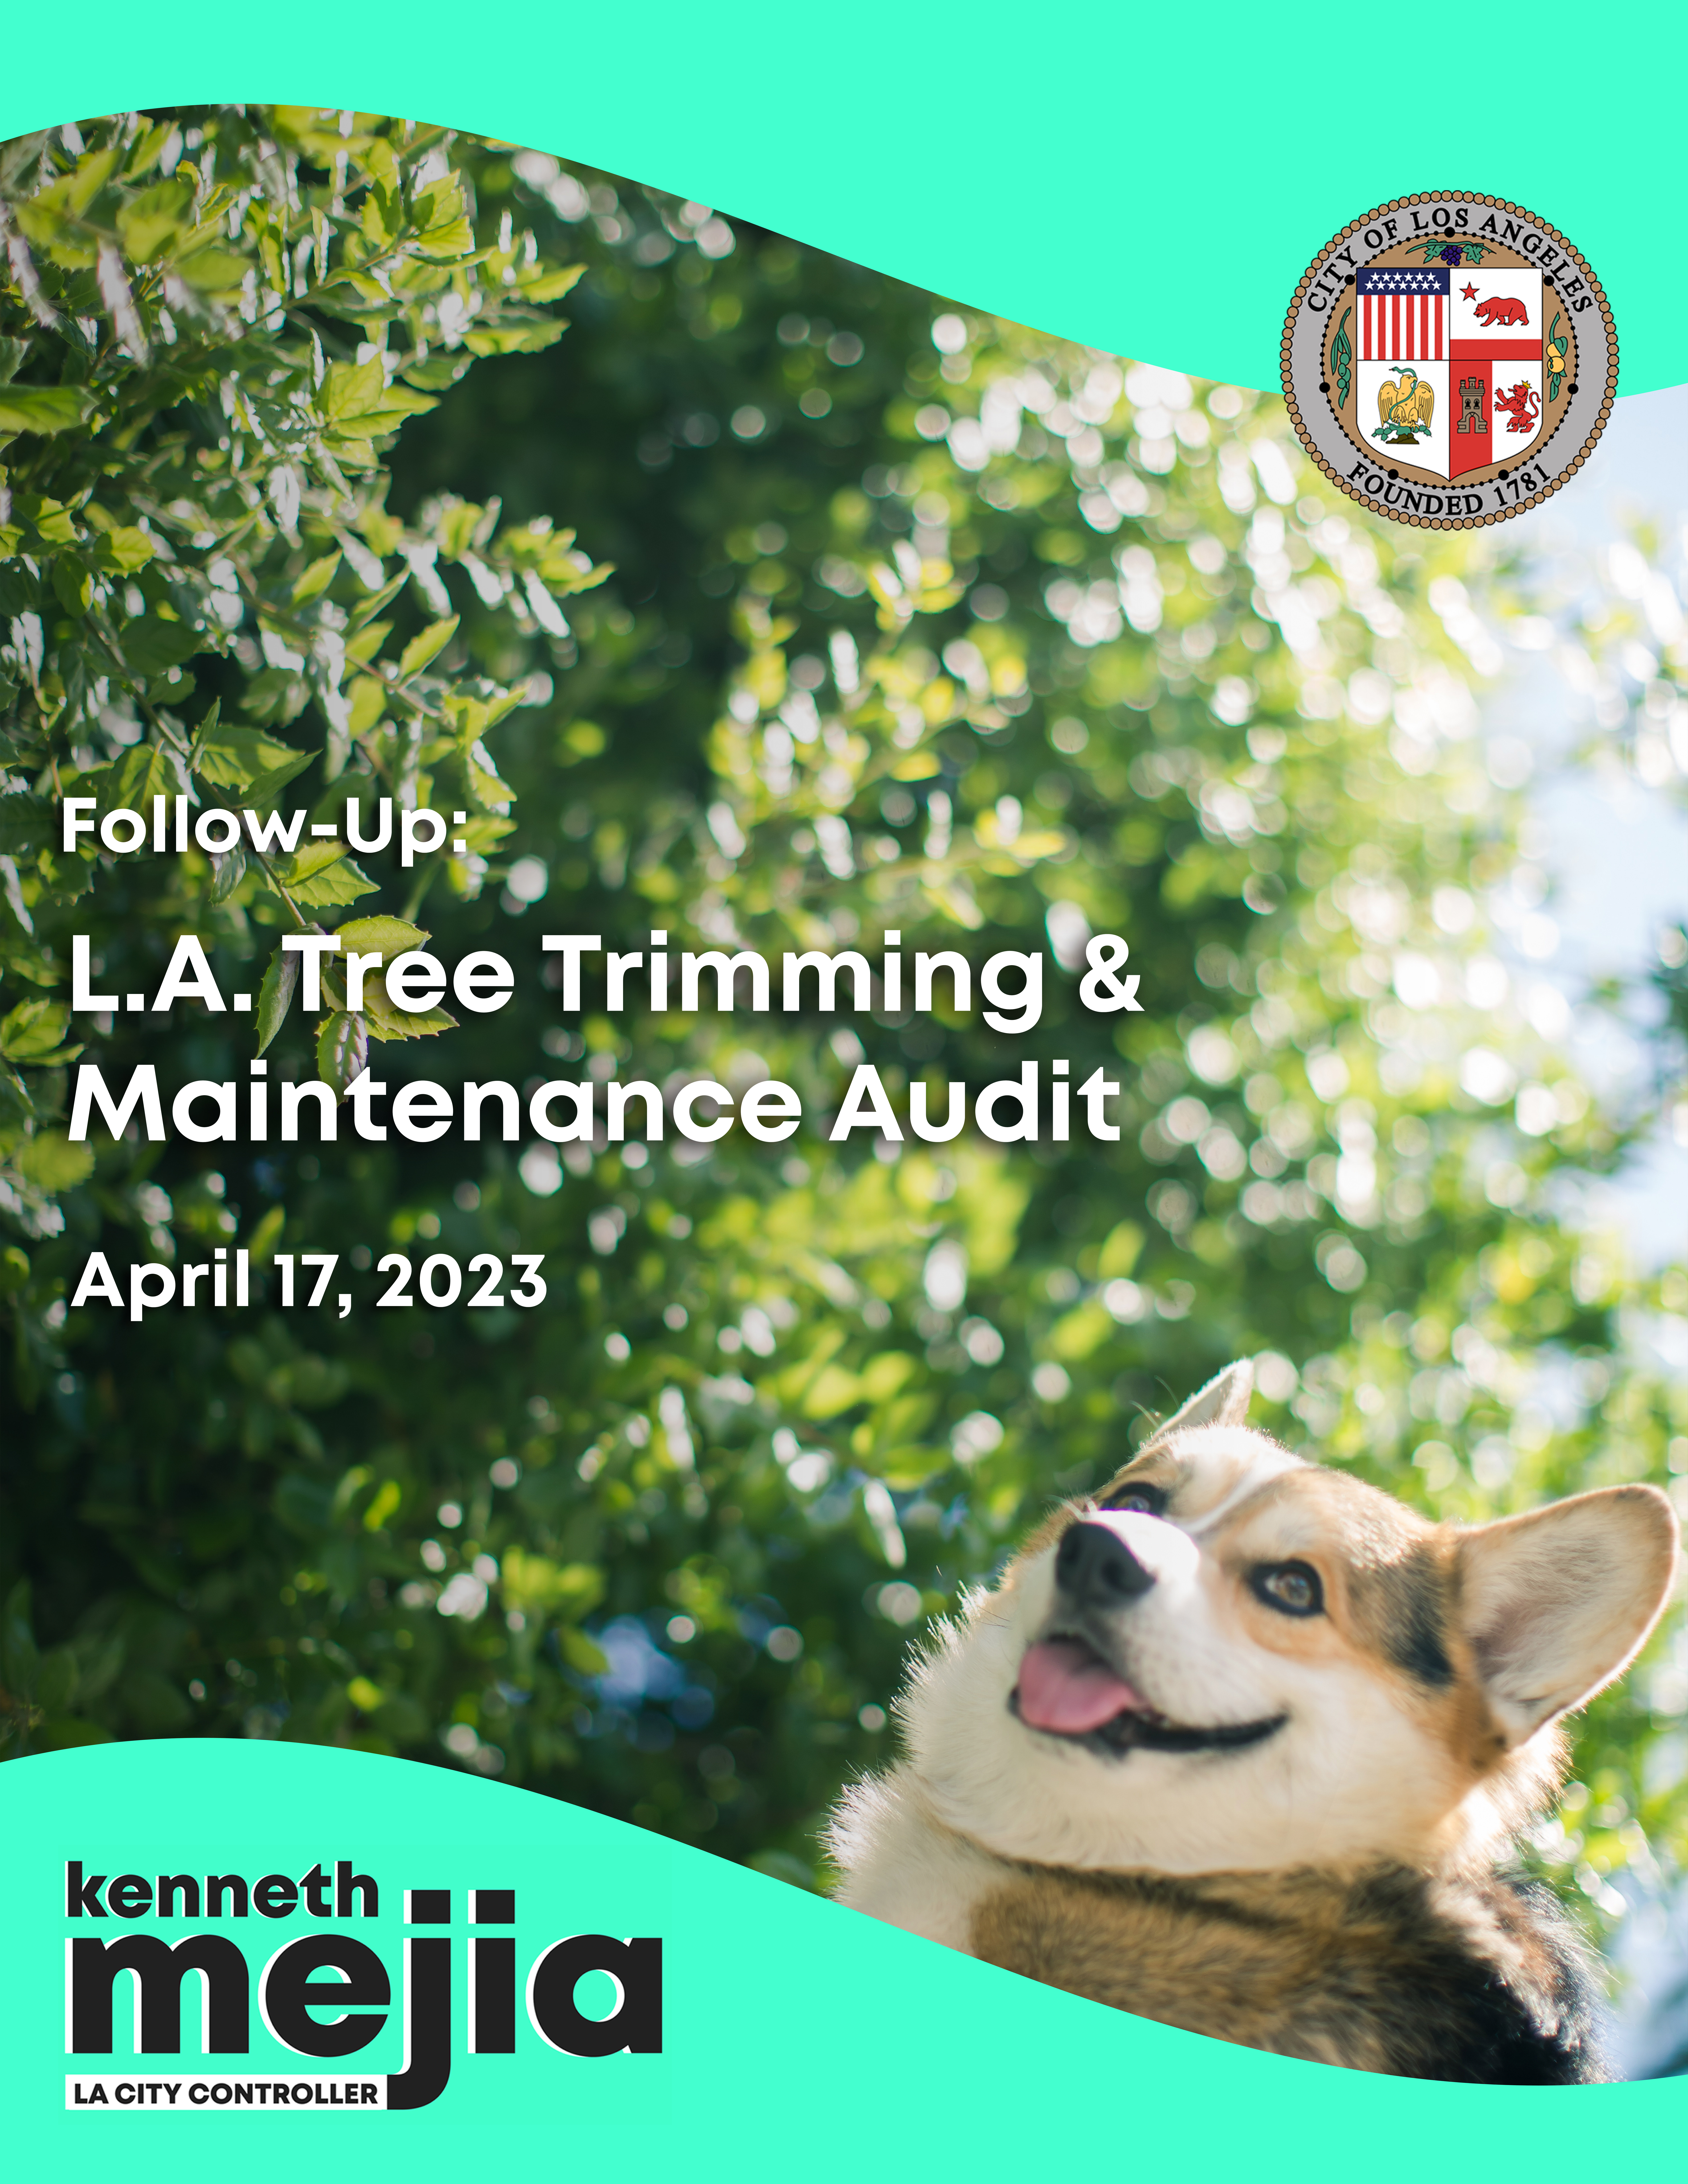 L.A. Tree Trimming & Maintenance Audit - Follow-up